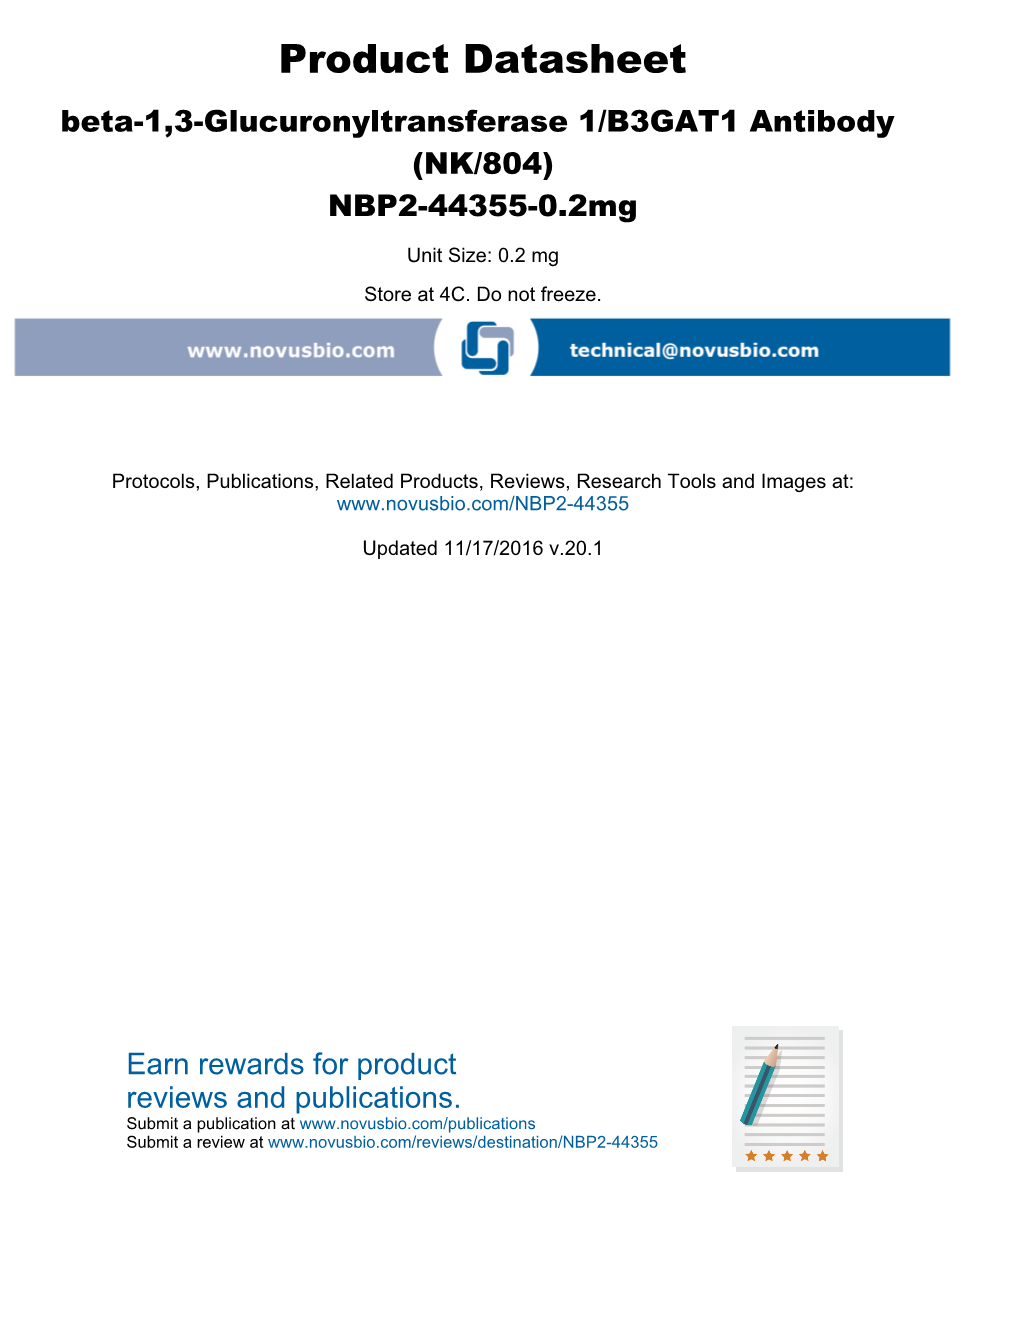 Product Datasheet Beta-1,3-Glucuronyltransferase 1/B3GAT1 Antibody (NK/804) NBP2-44355-0.2Mg